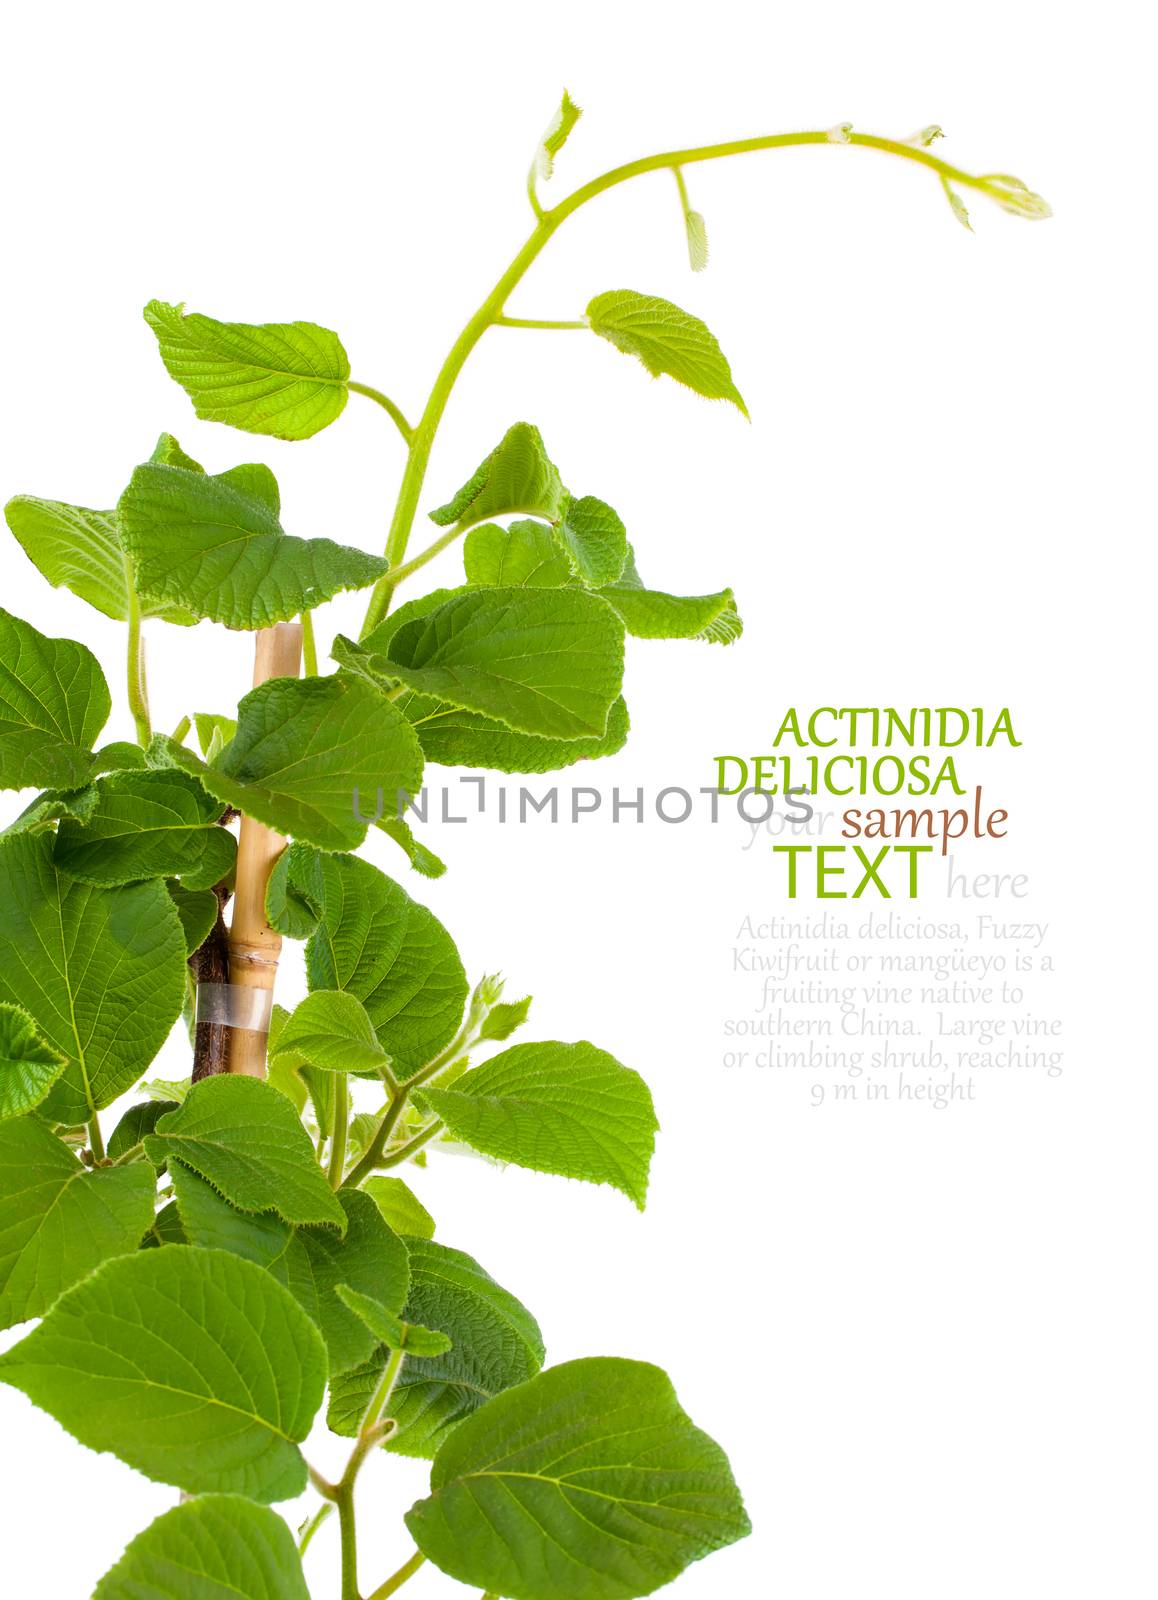 Actinidia deliciosa plant on white background by motorolka